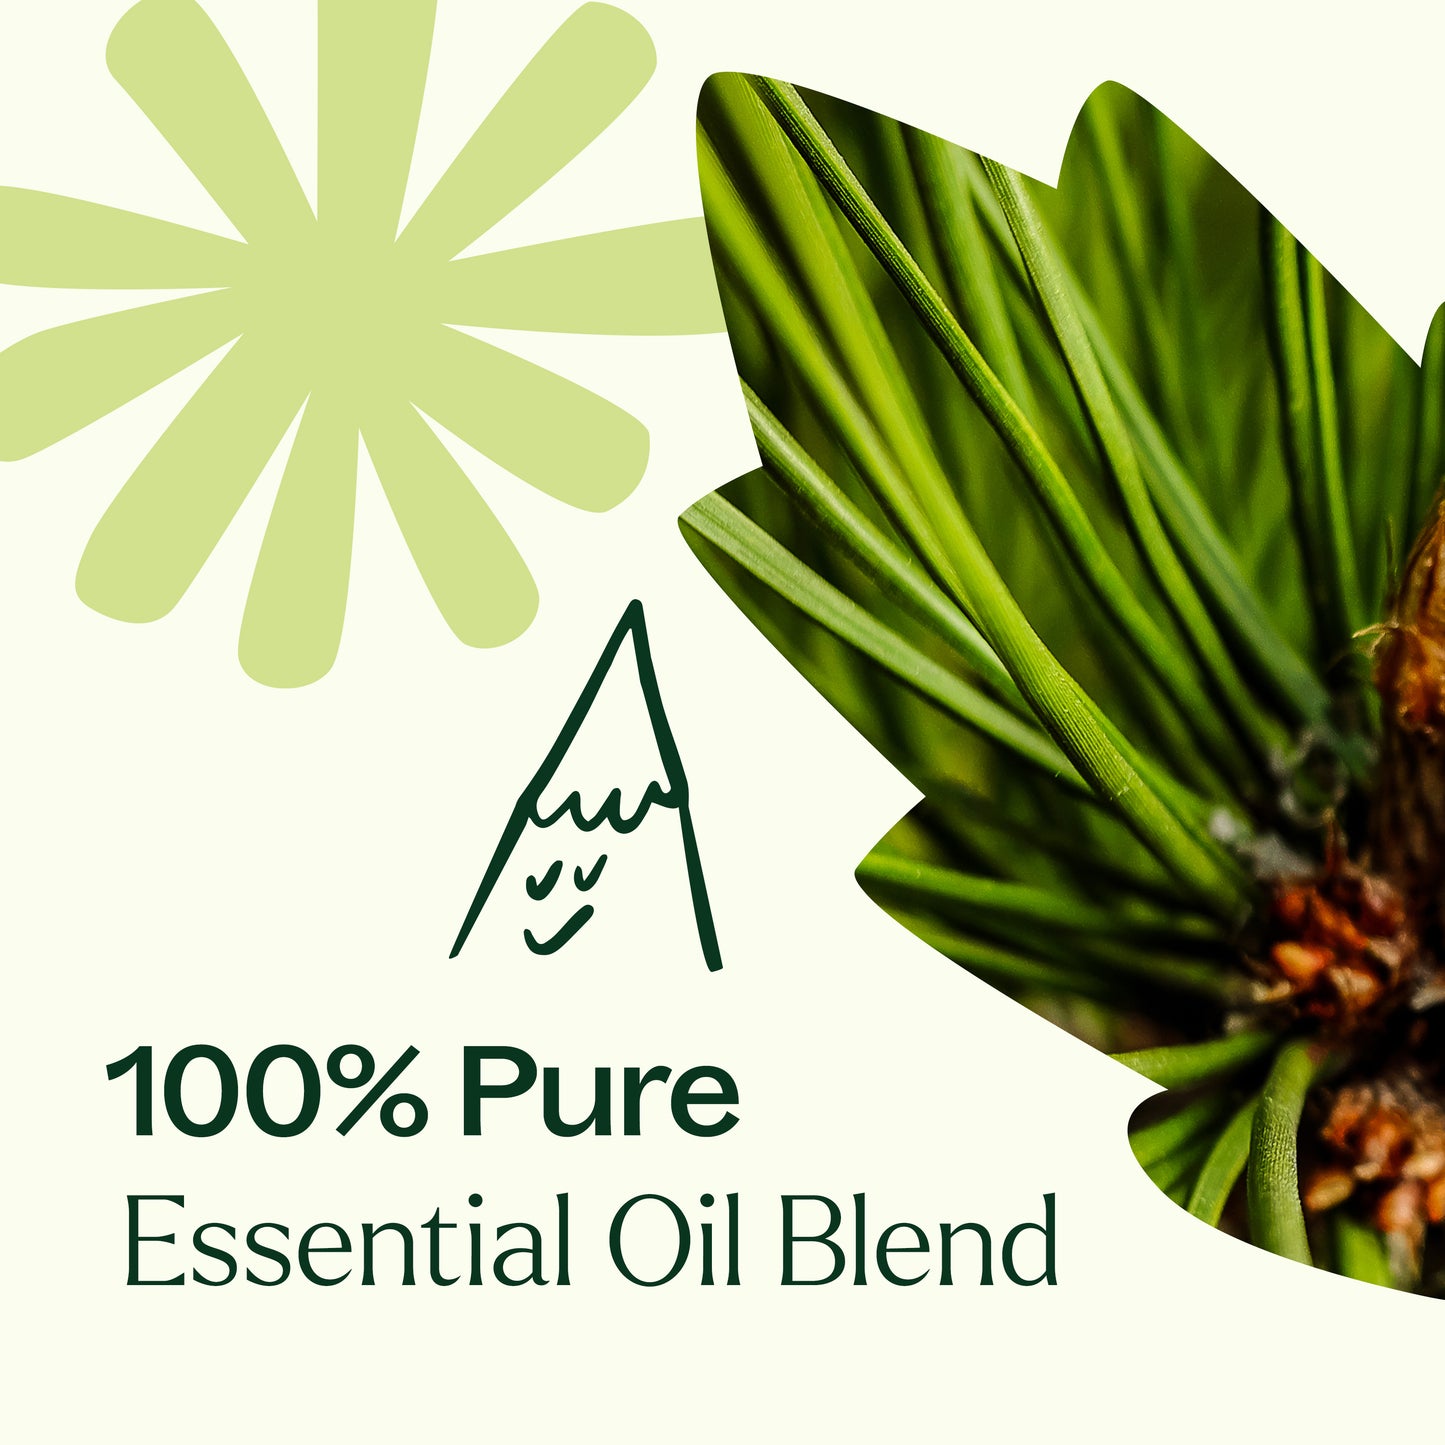 100% pure essential oil blend